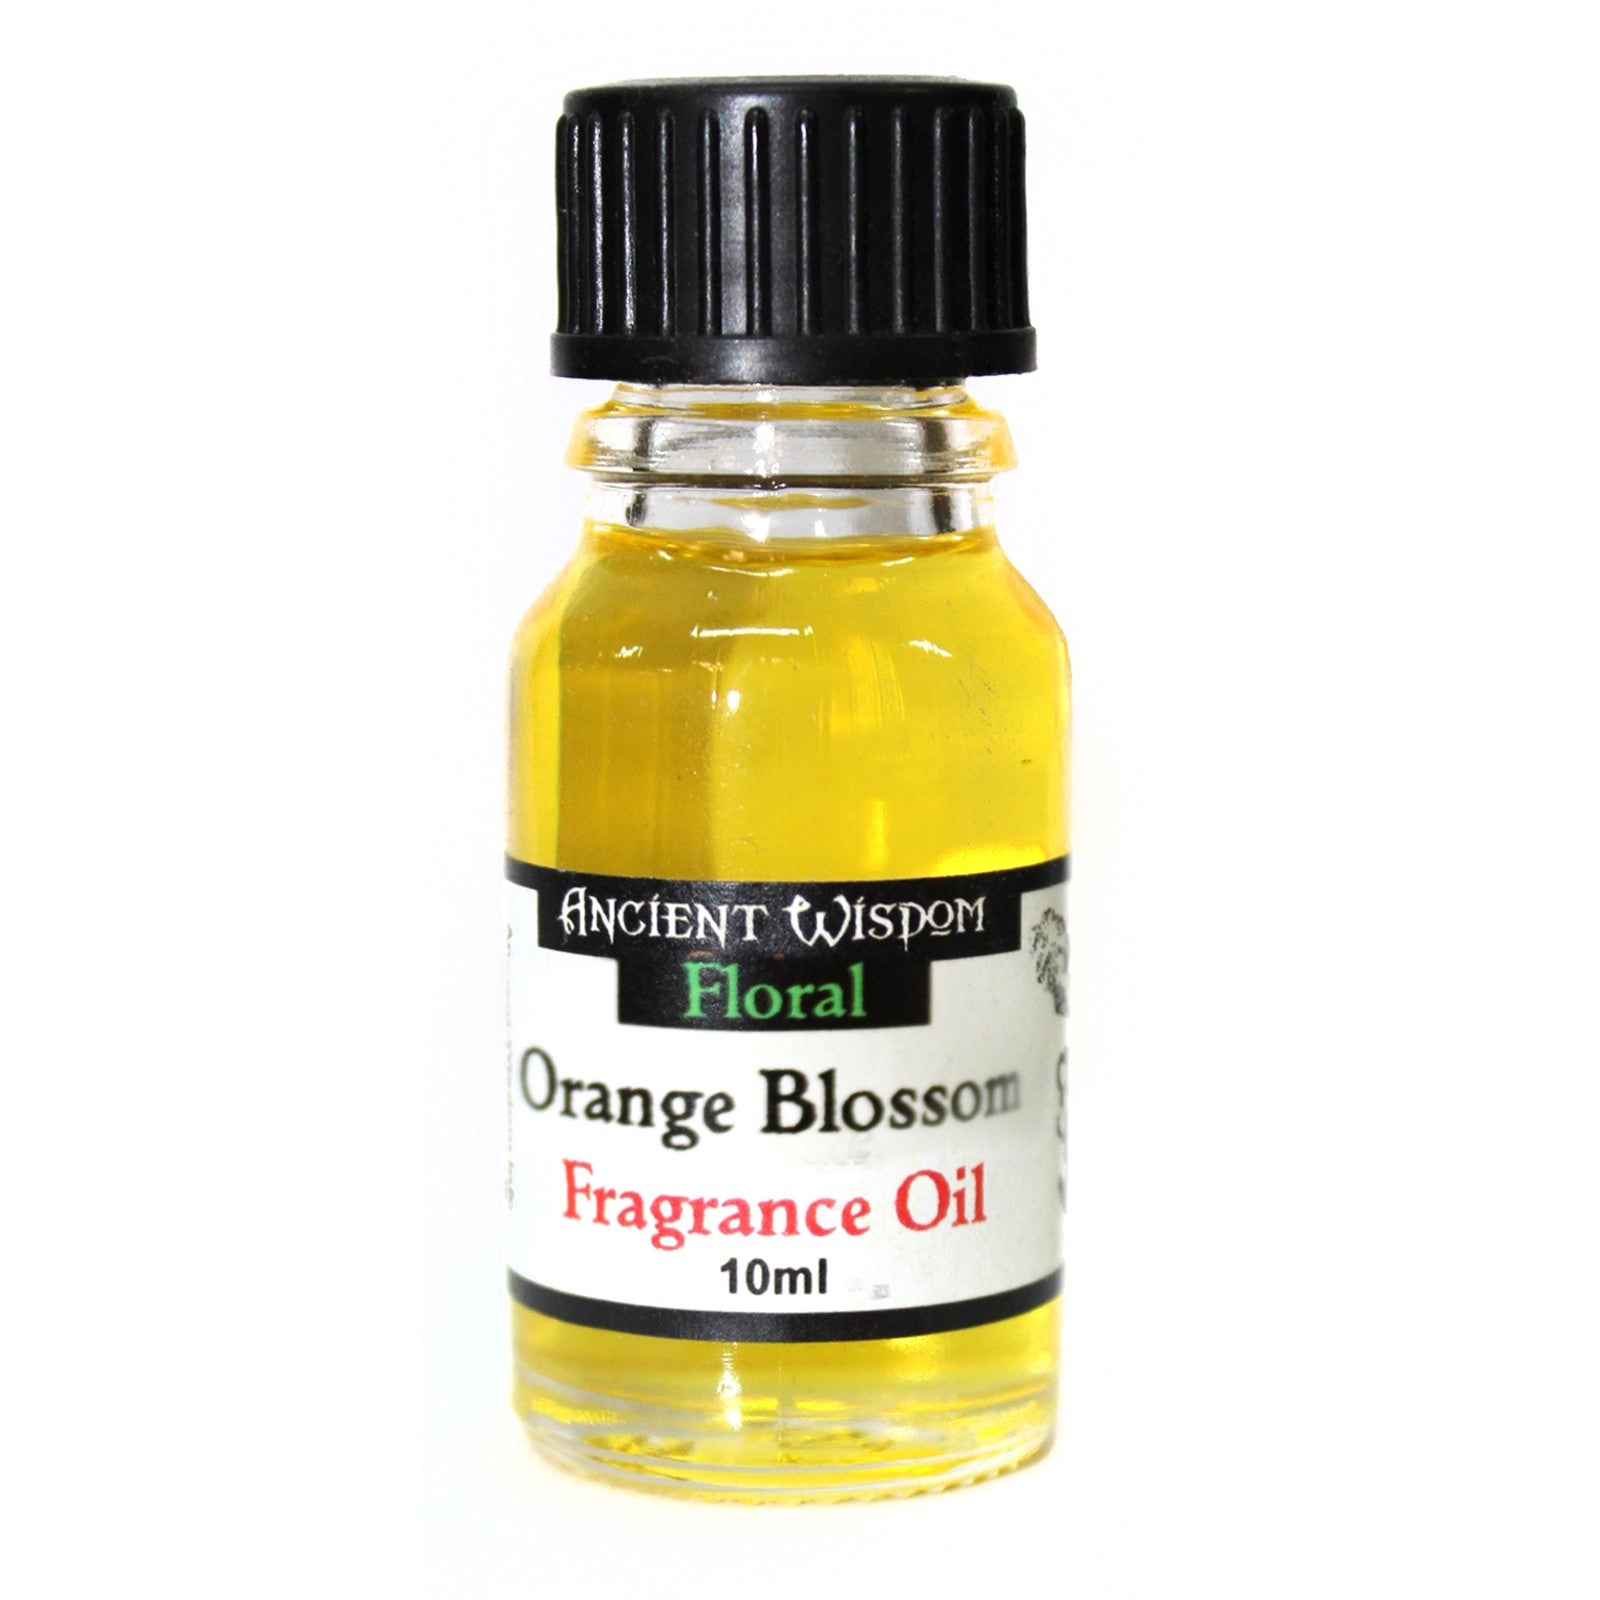 View 10ml Orange Blossom Fragrance Oil information